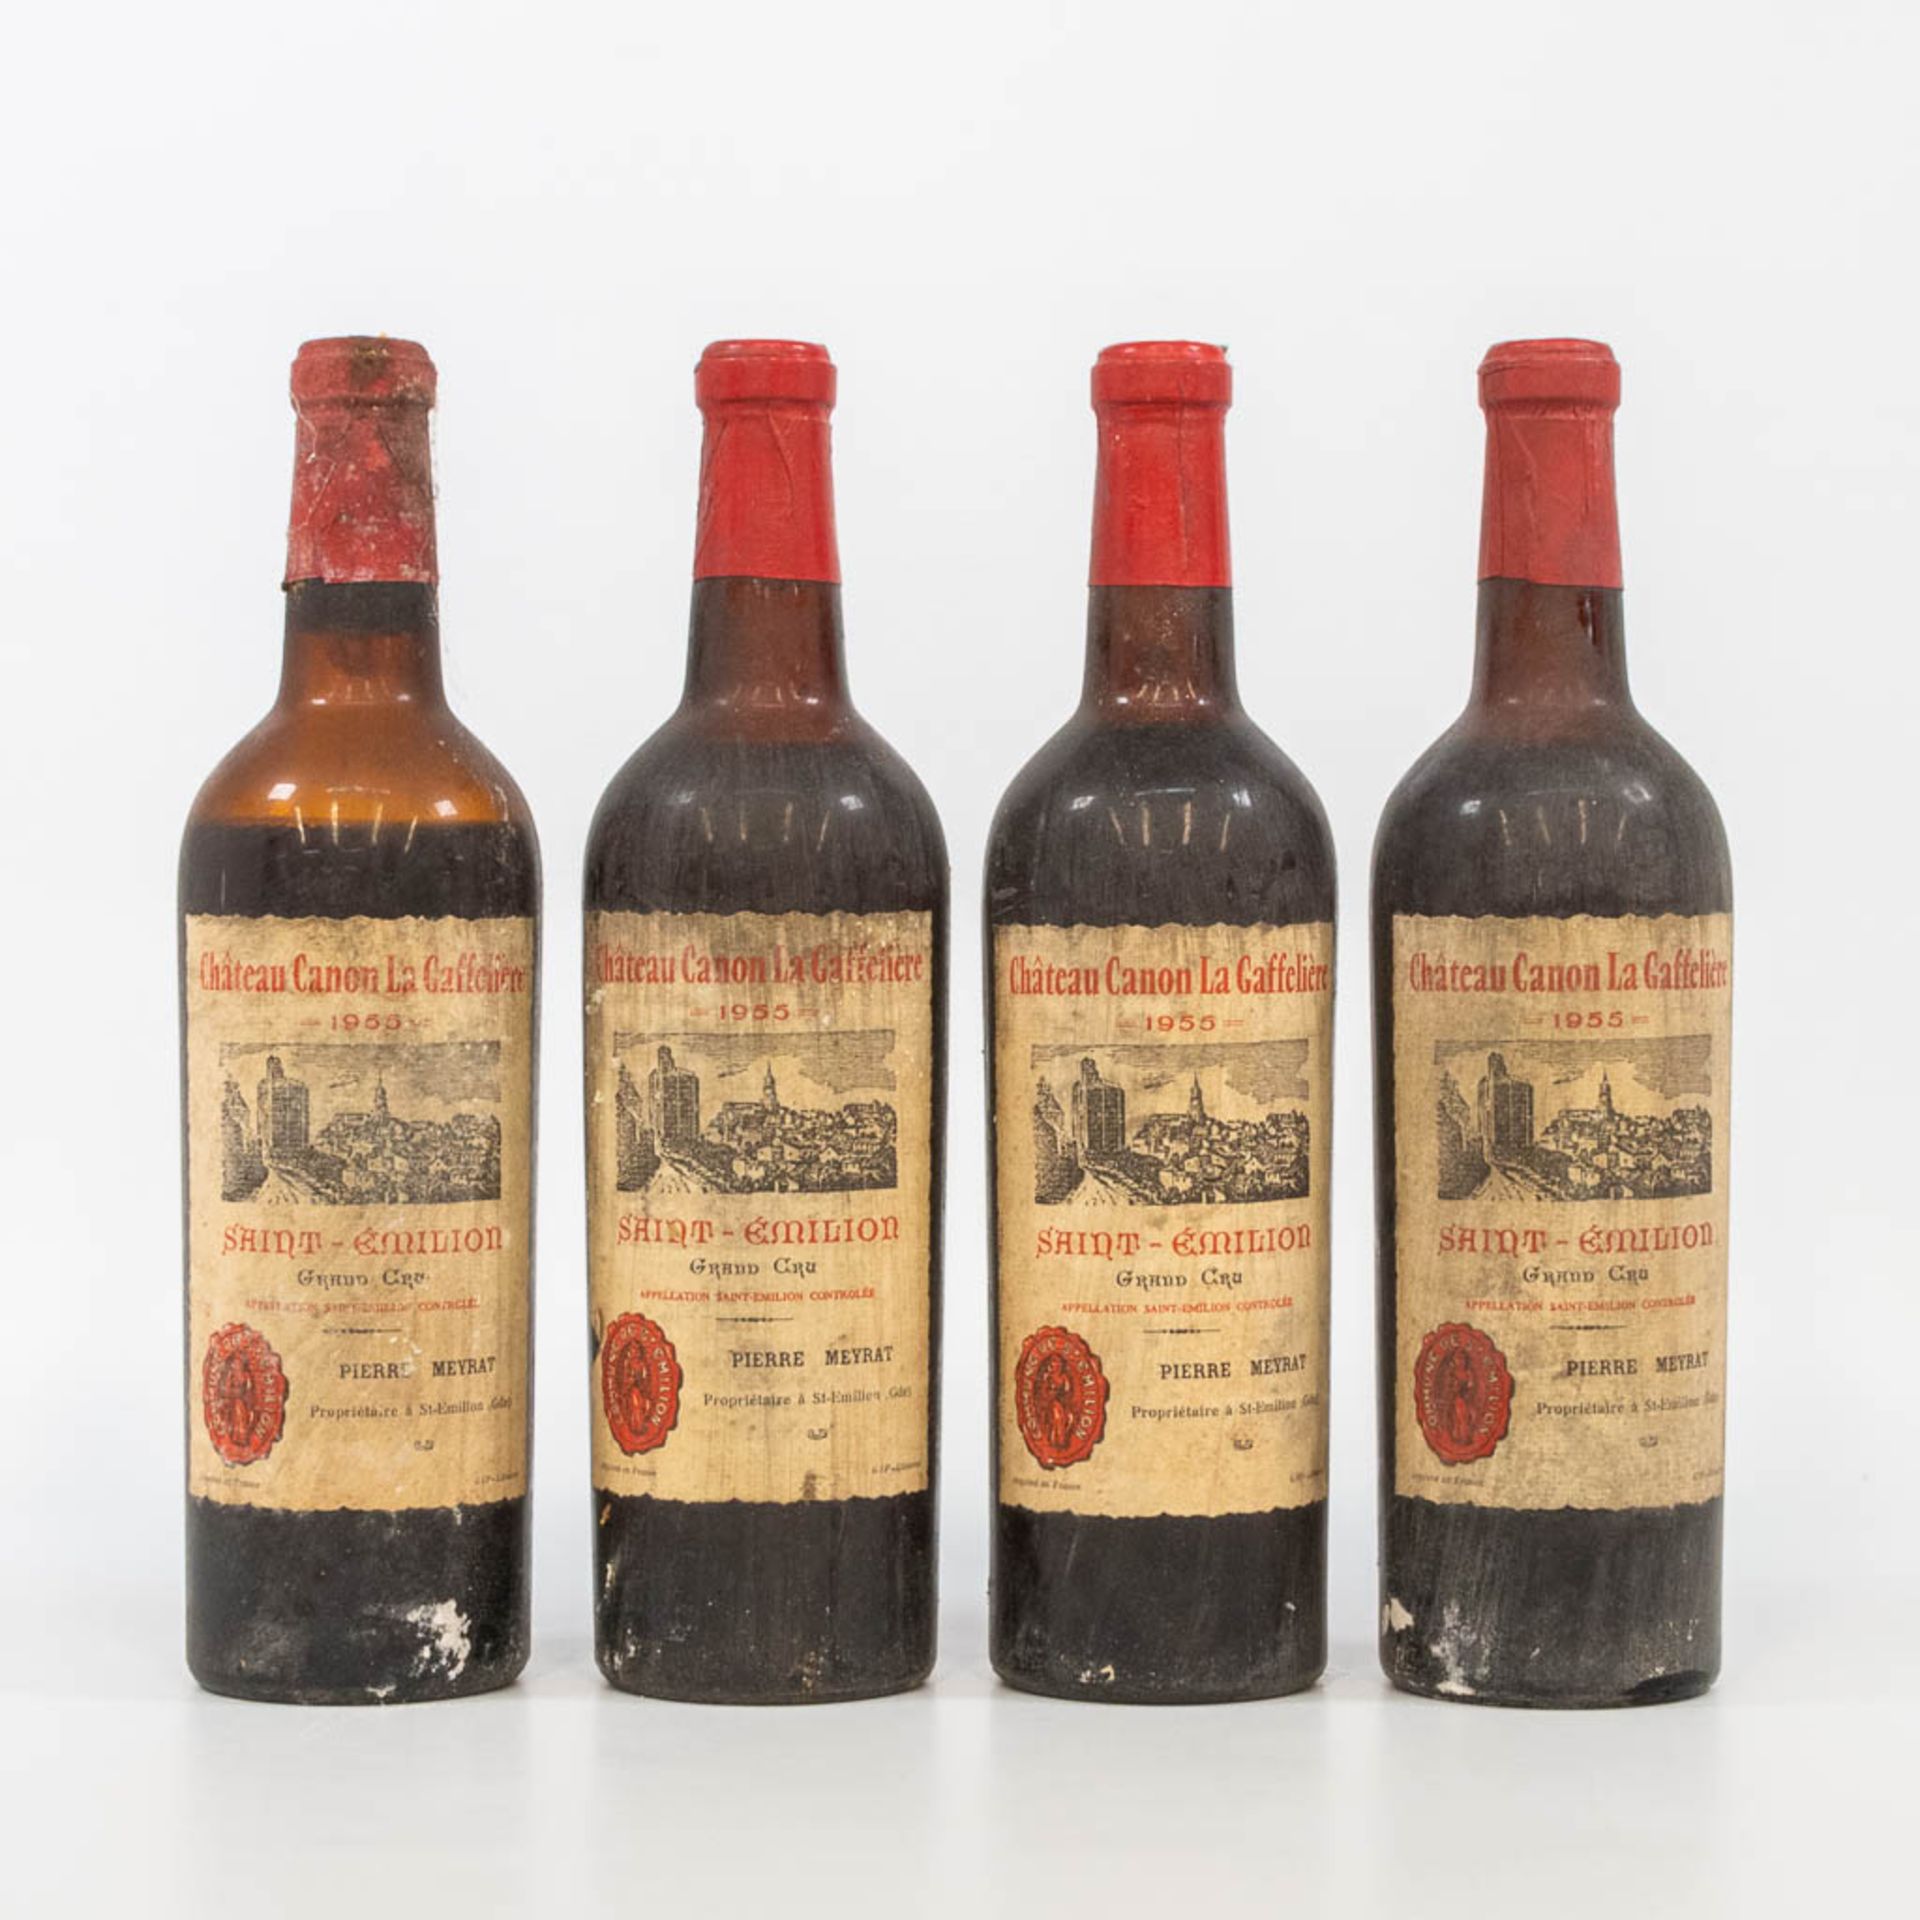 A collection of 4 bottles Chateau Canon la Gaffelire 1955.